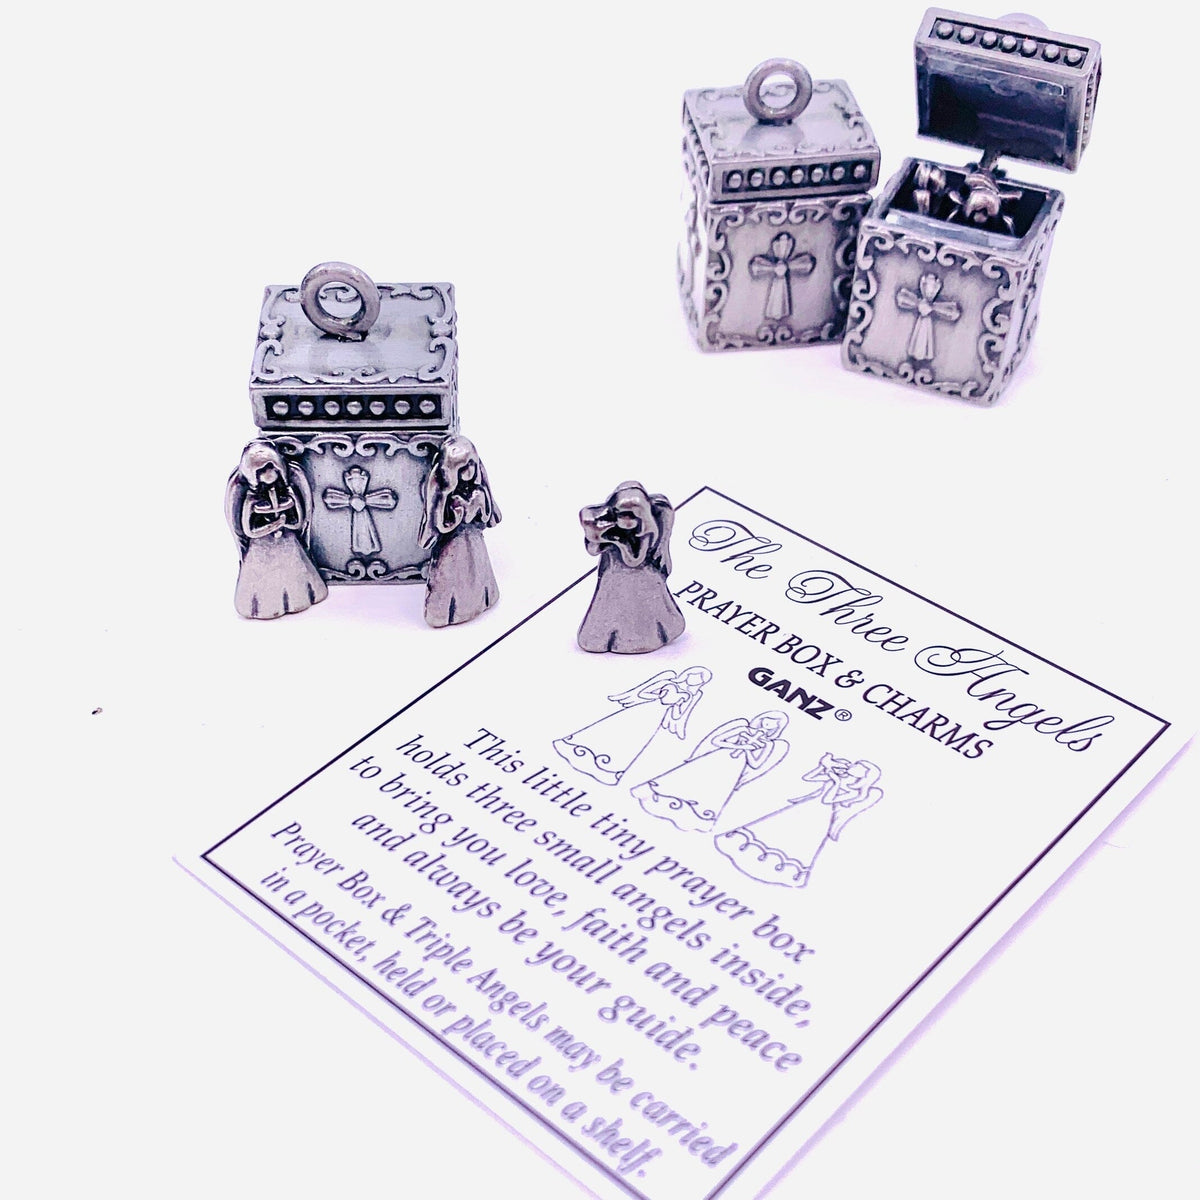 The Three Angels Prayer Box and Pocket Charms PT28 Miniature GANZ 